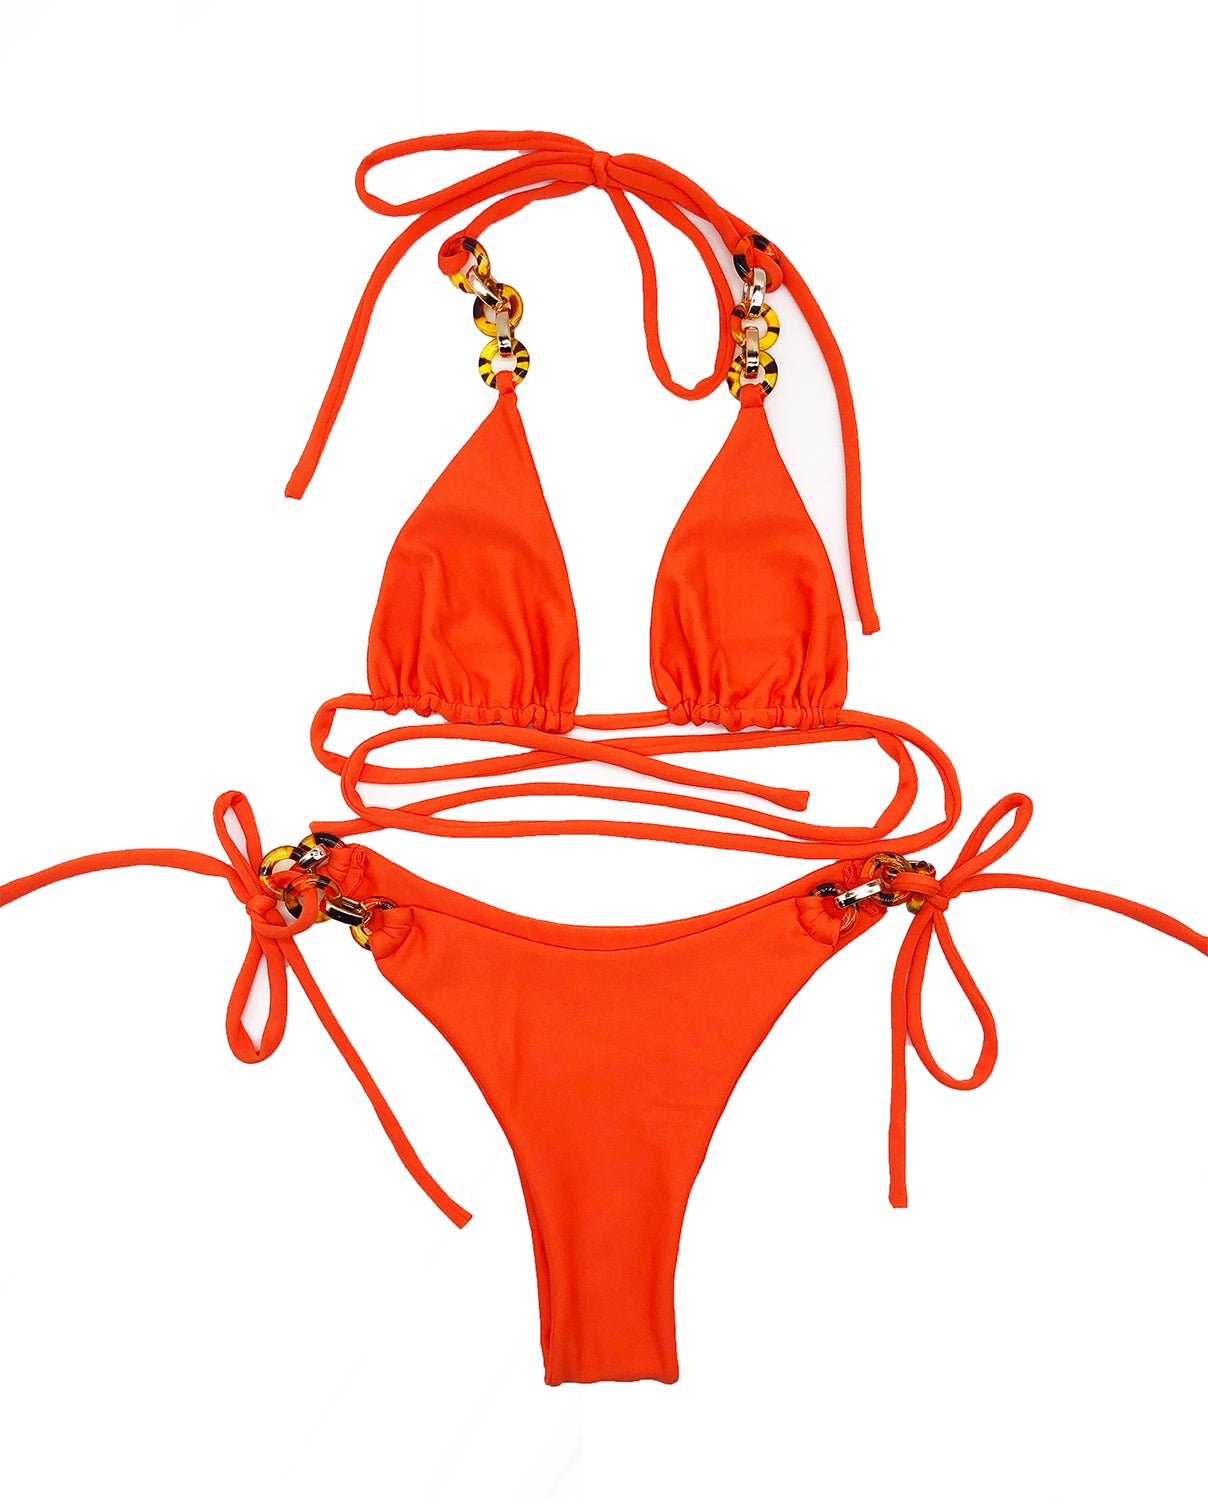 Christen Harper - Sports Illustrated Swimsuit - Gabriela Pires Beachwear